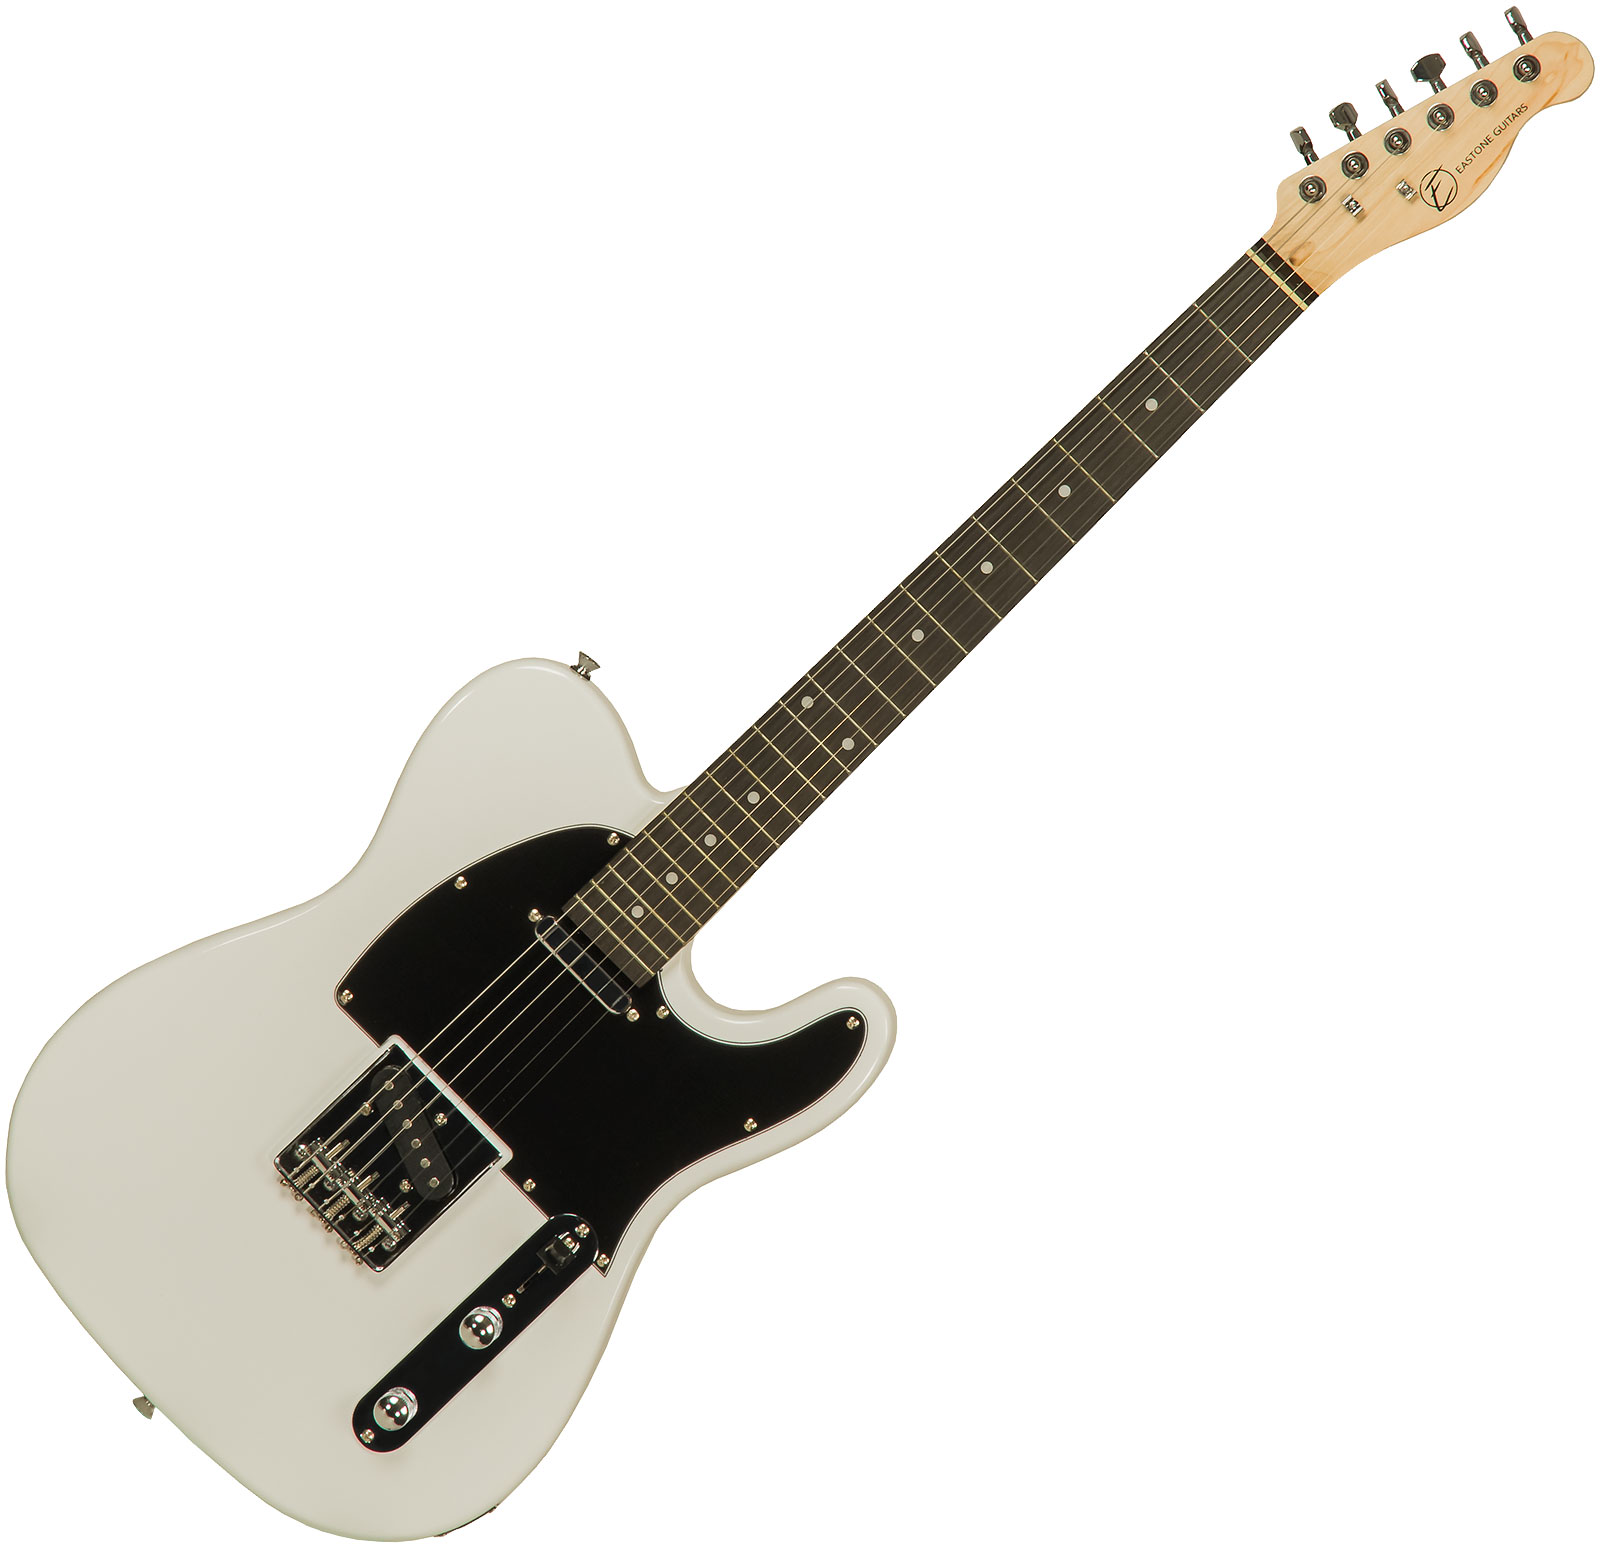 Eastone Tl70 +marshall Mg10g Combo 10 W +housse +courroie +cable +mediators - Olympic White - Elektrische gitaar set - Variation 1